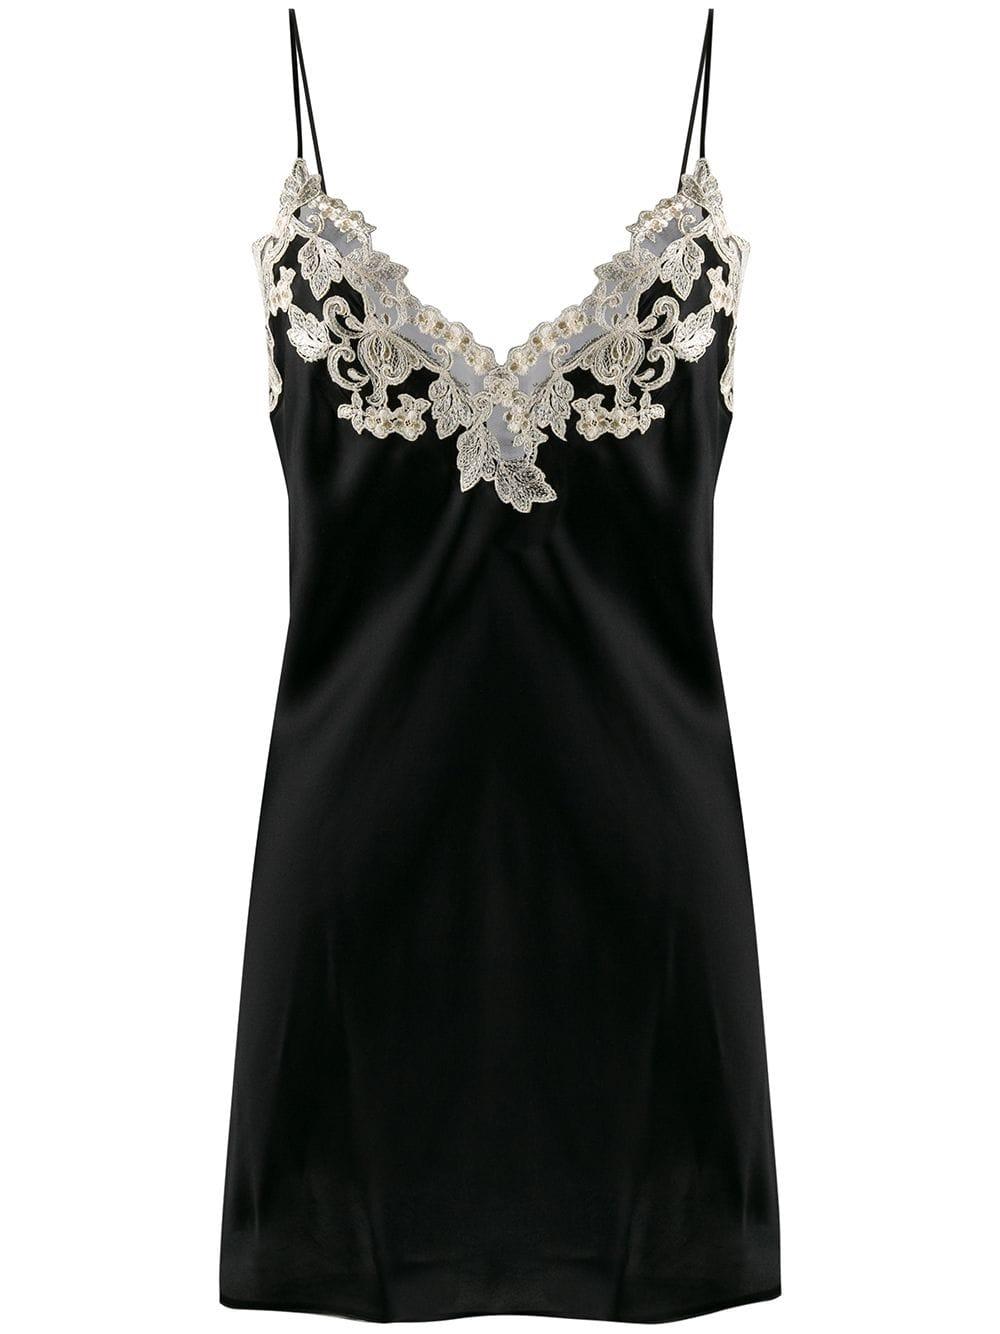 La Perla Maison Lace Trim Slip Dress in Black